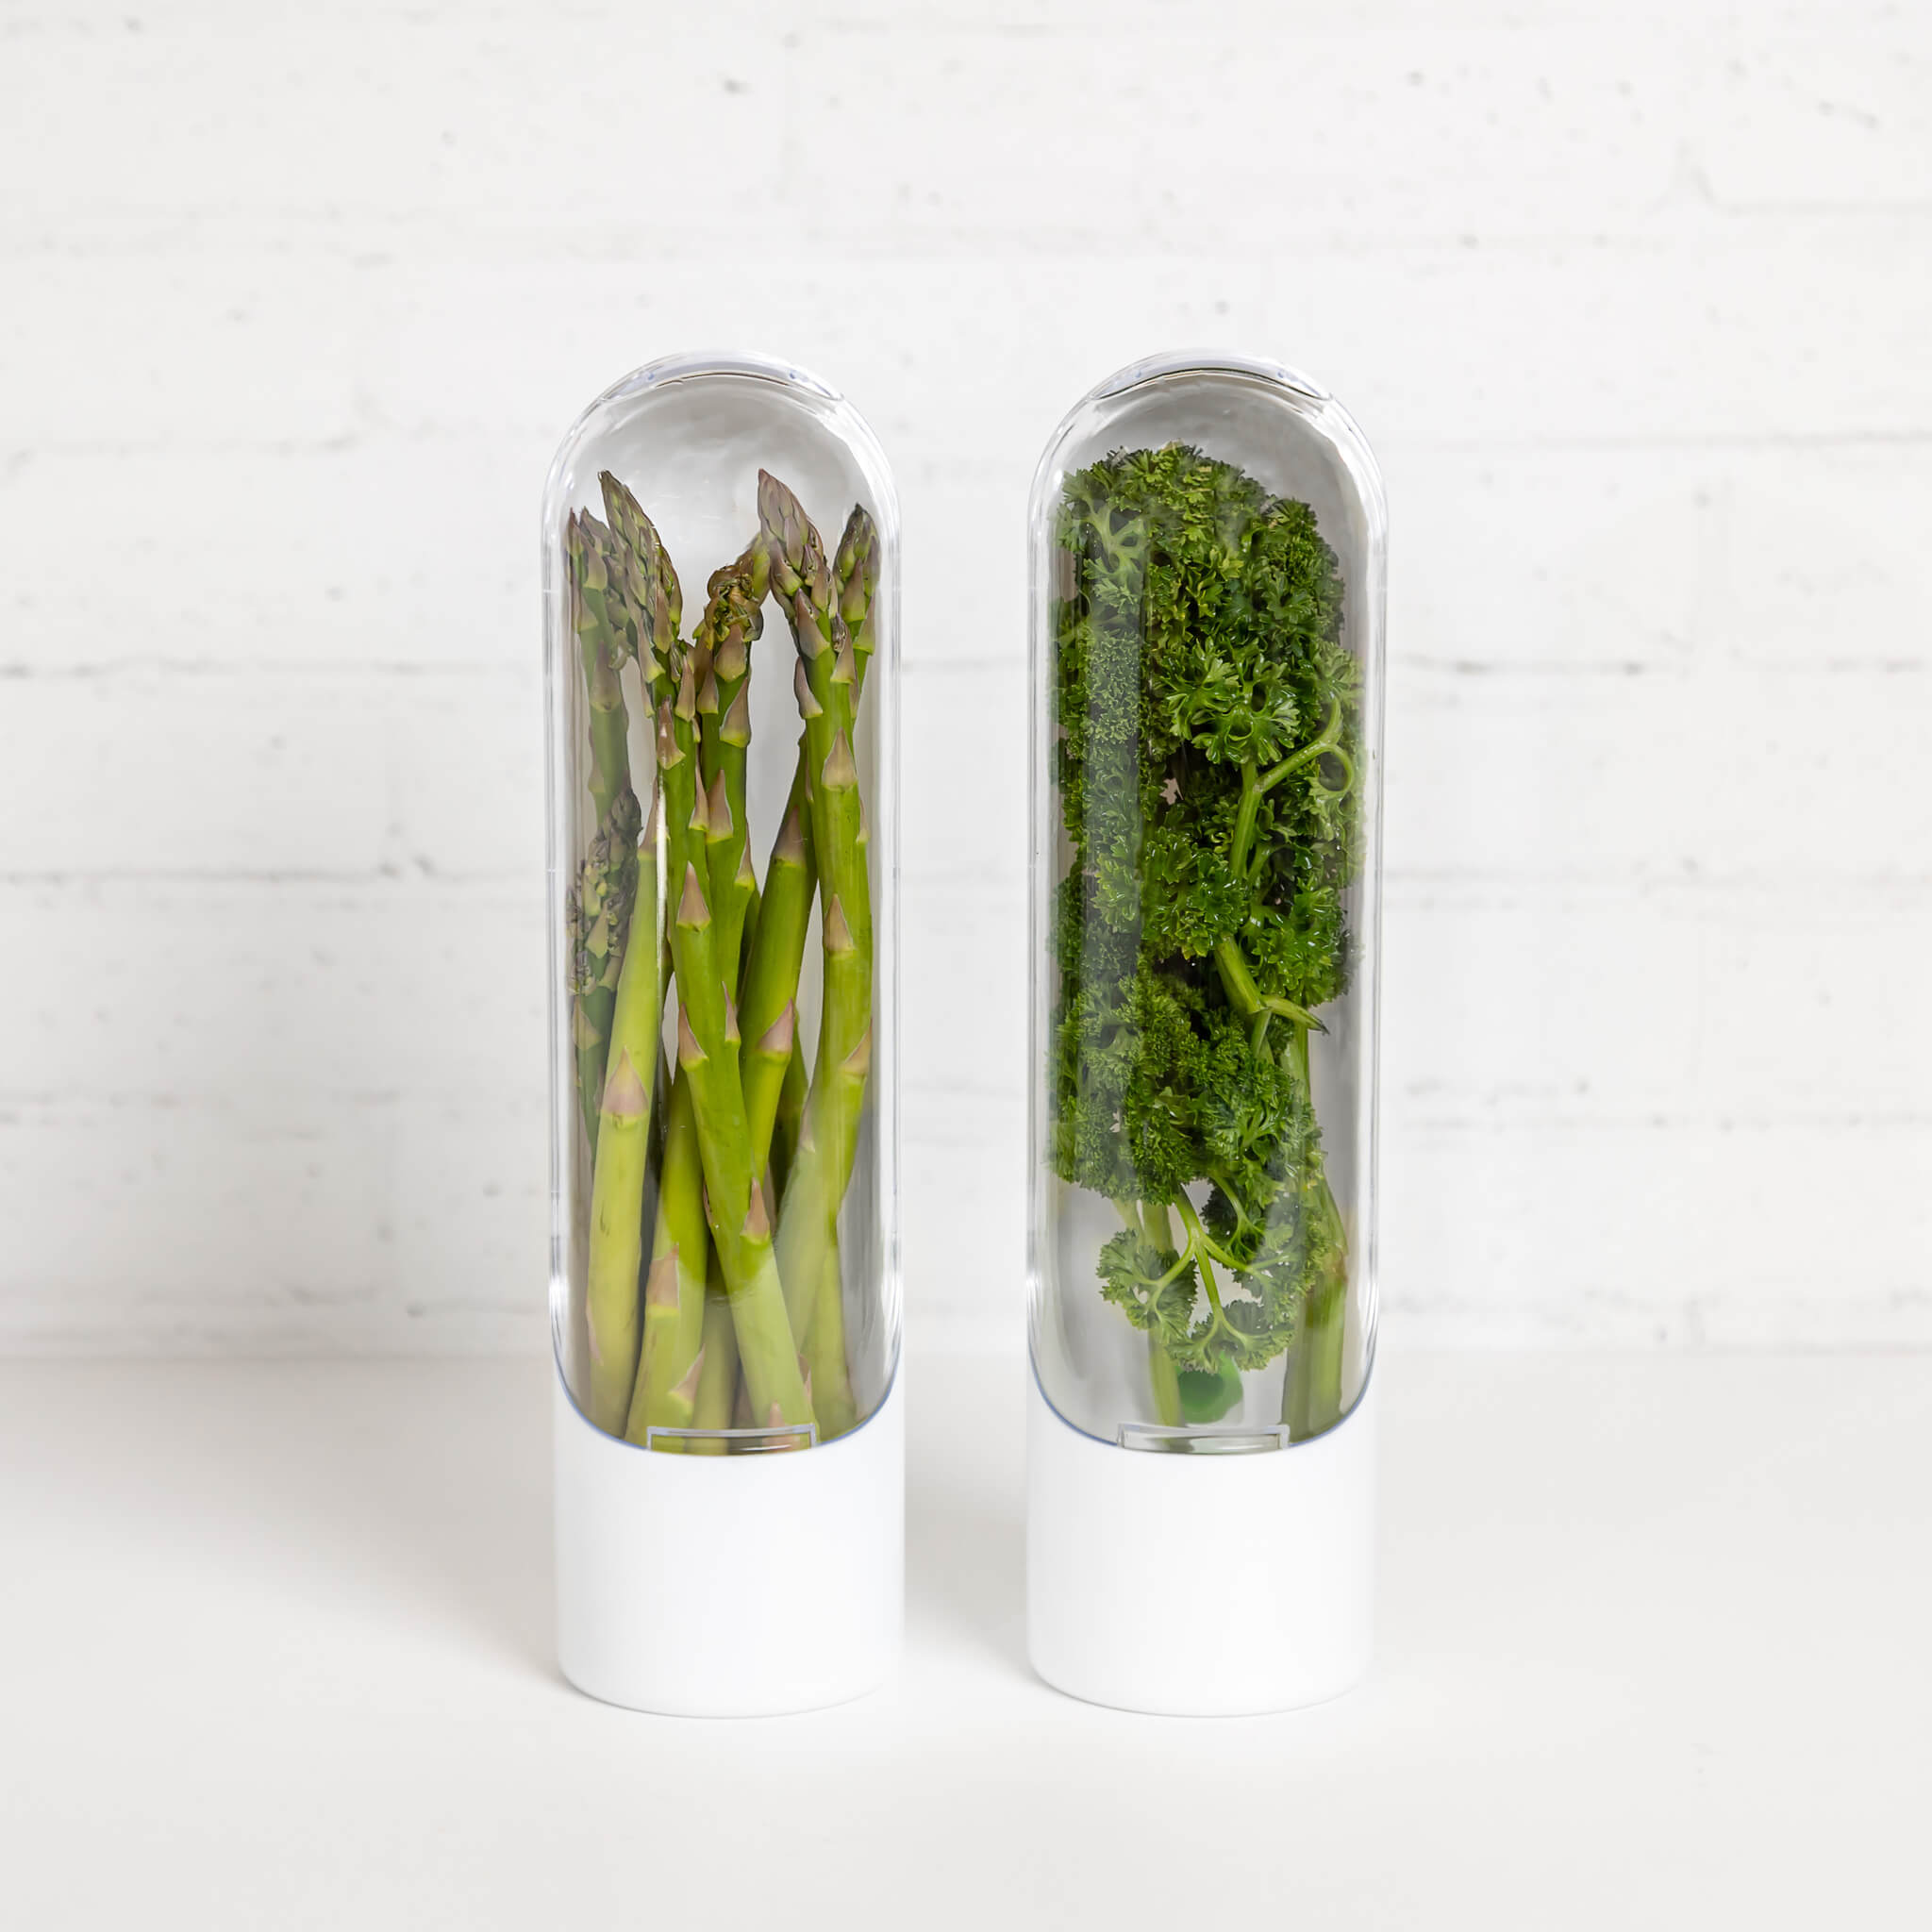 Clear plastic Fridge Herb Keeper by Pretty Little Designs - Keep your herbs fresh longe